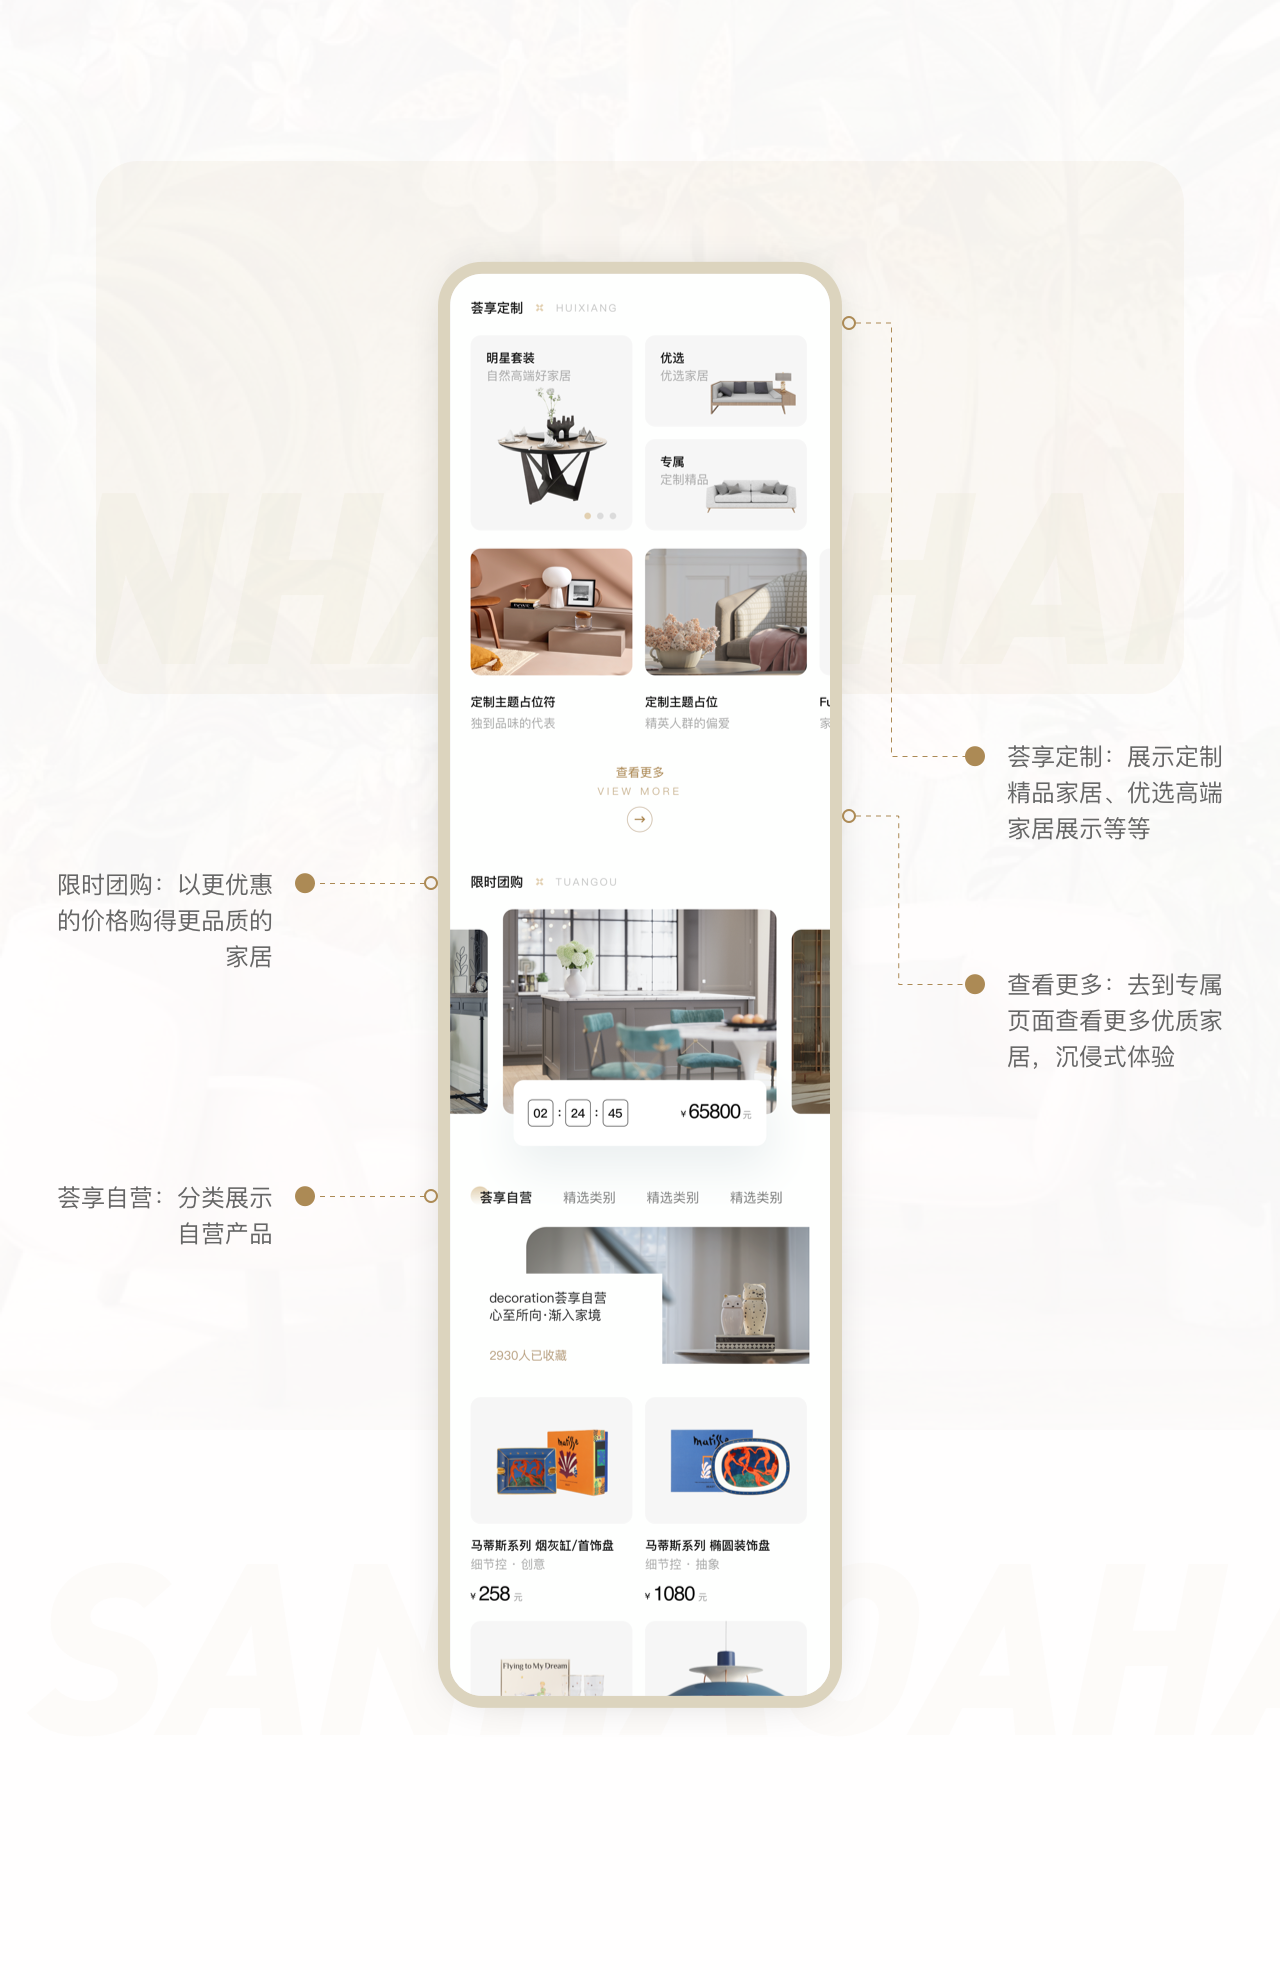 Xingcheng Habitat Real Estate Investment Group-Huixiangjia Home Decoration Platform